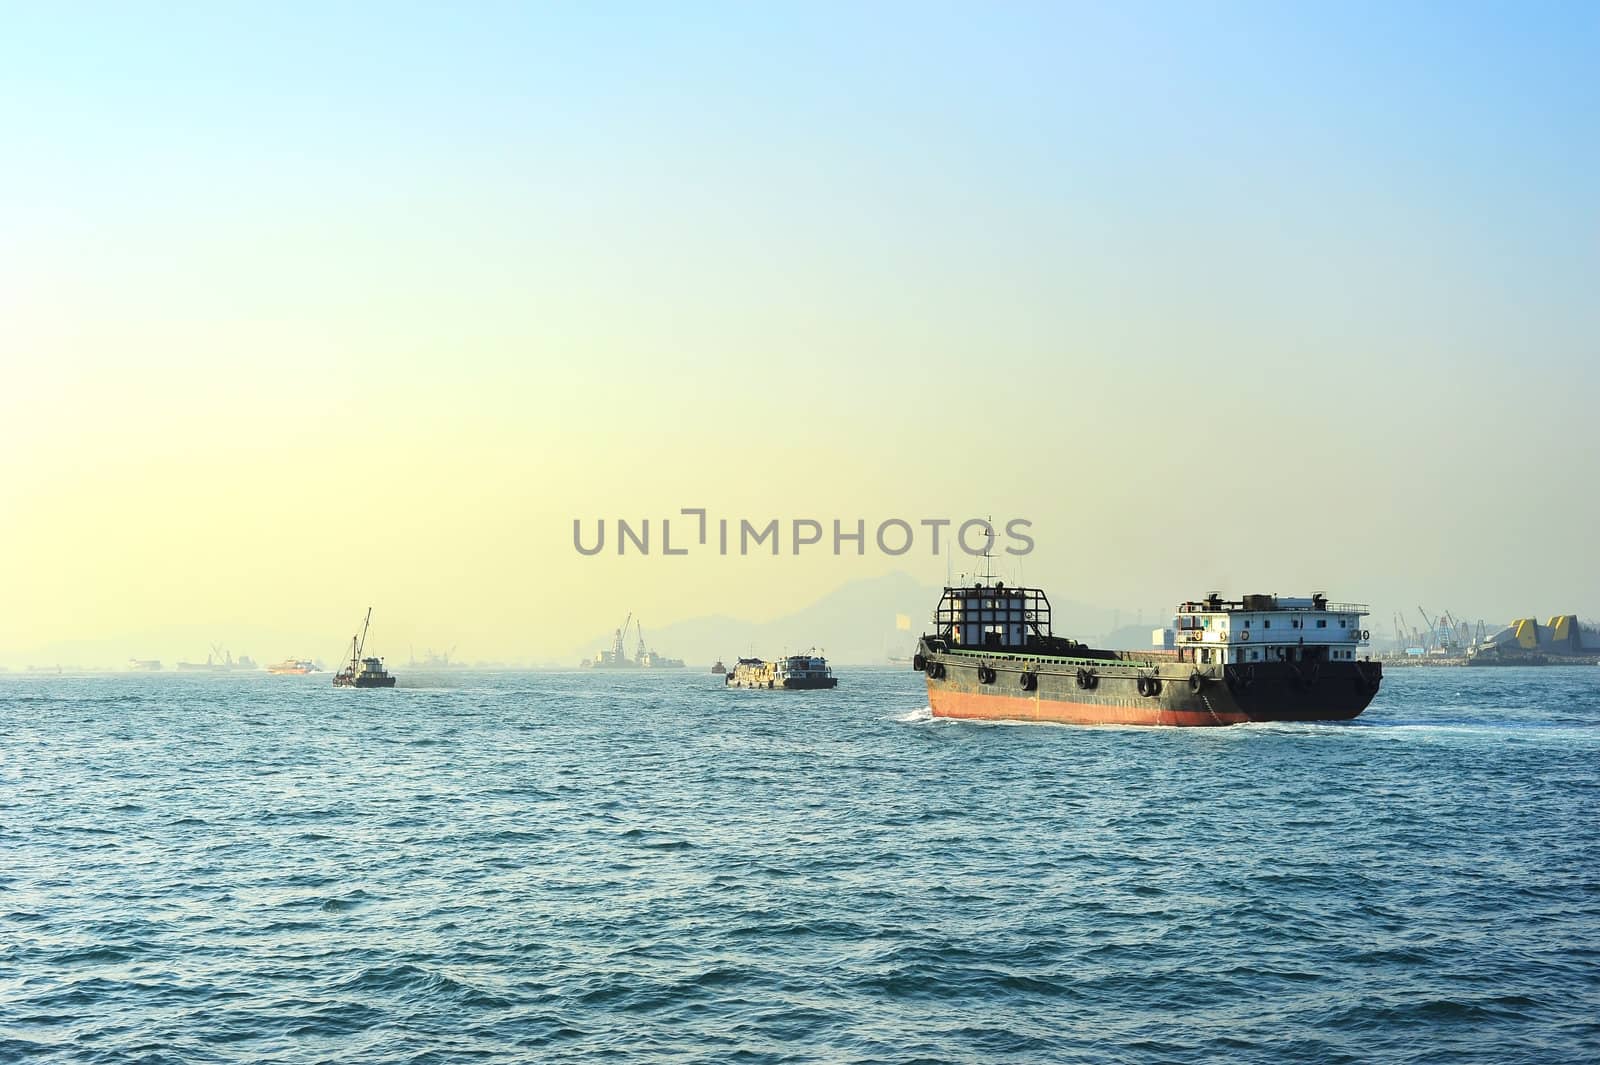 Industrial ships in Hong Kong harbor